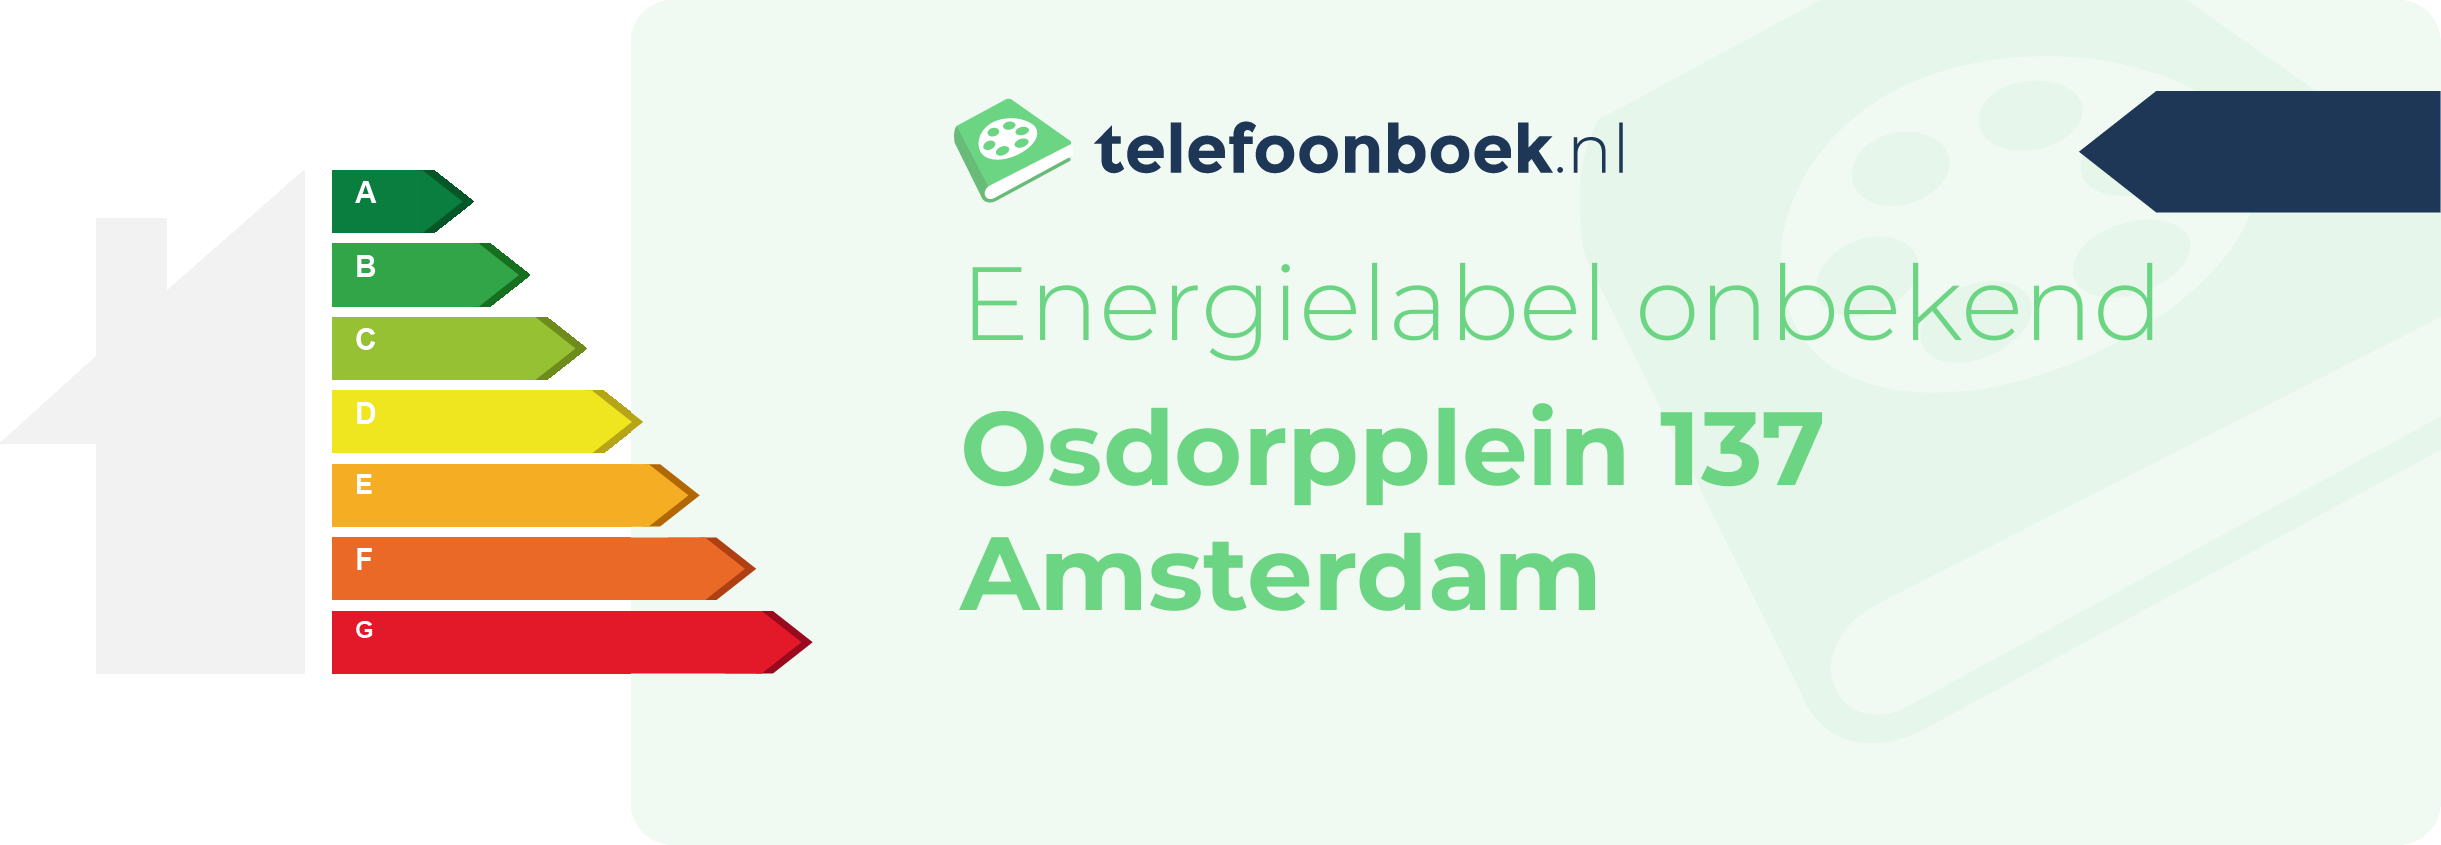 Energielabel Osdorpplein 137 Amsterdam